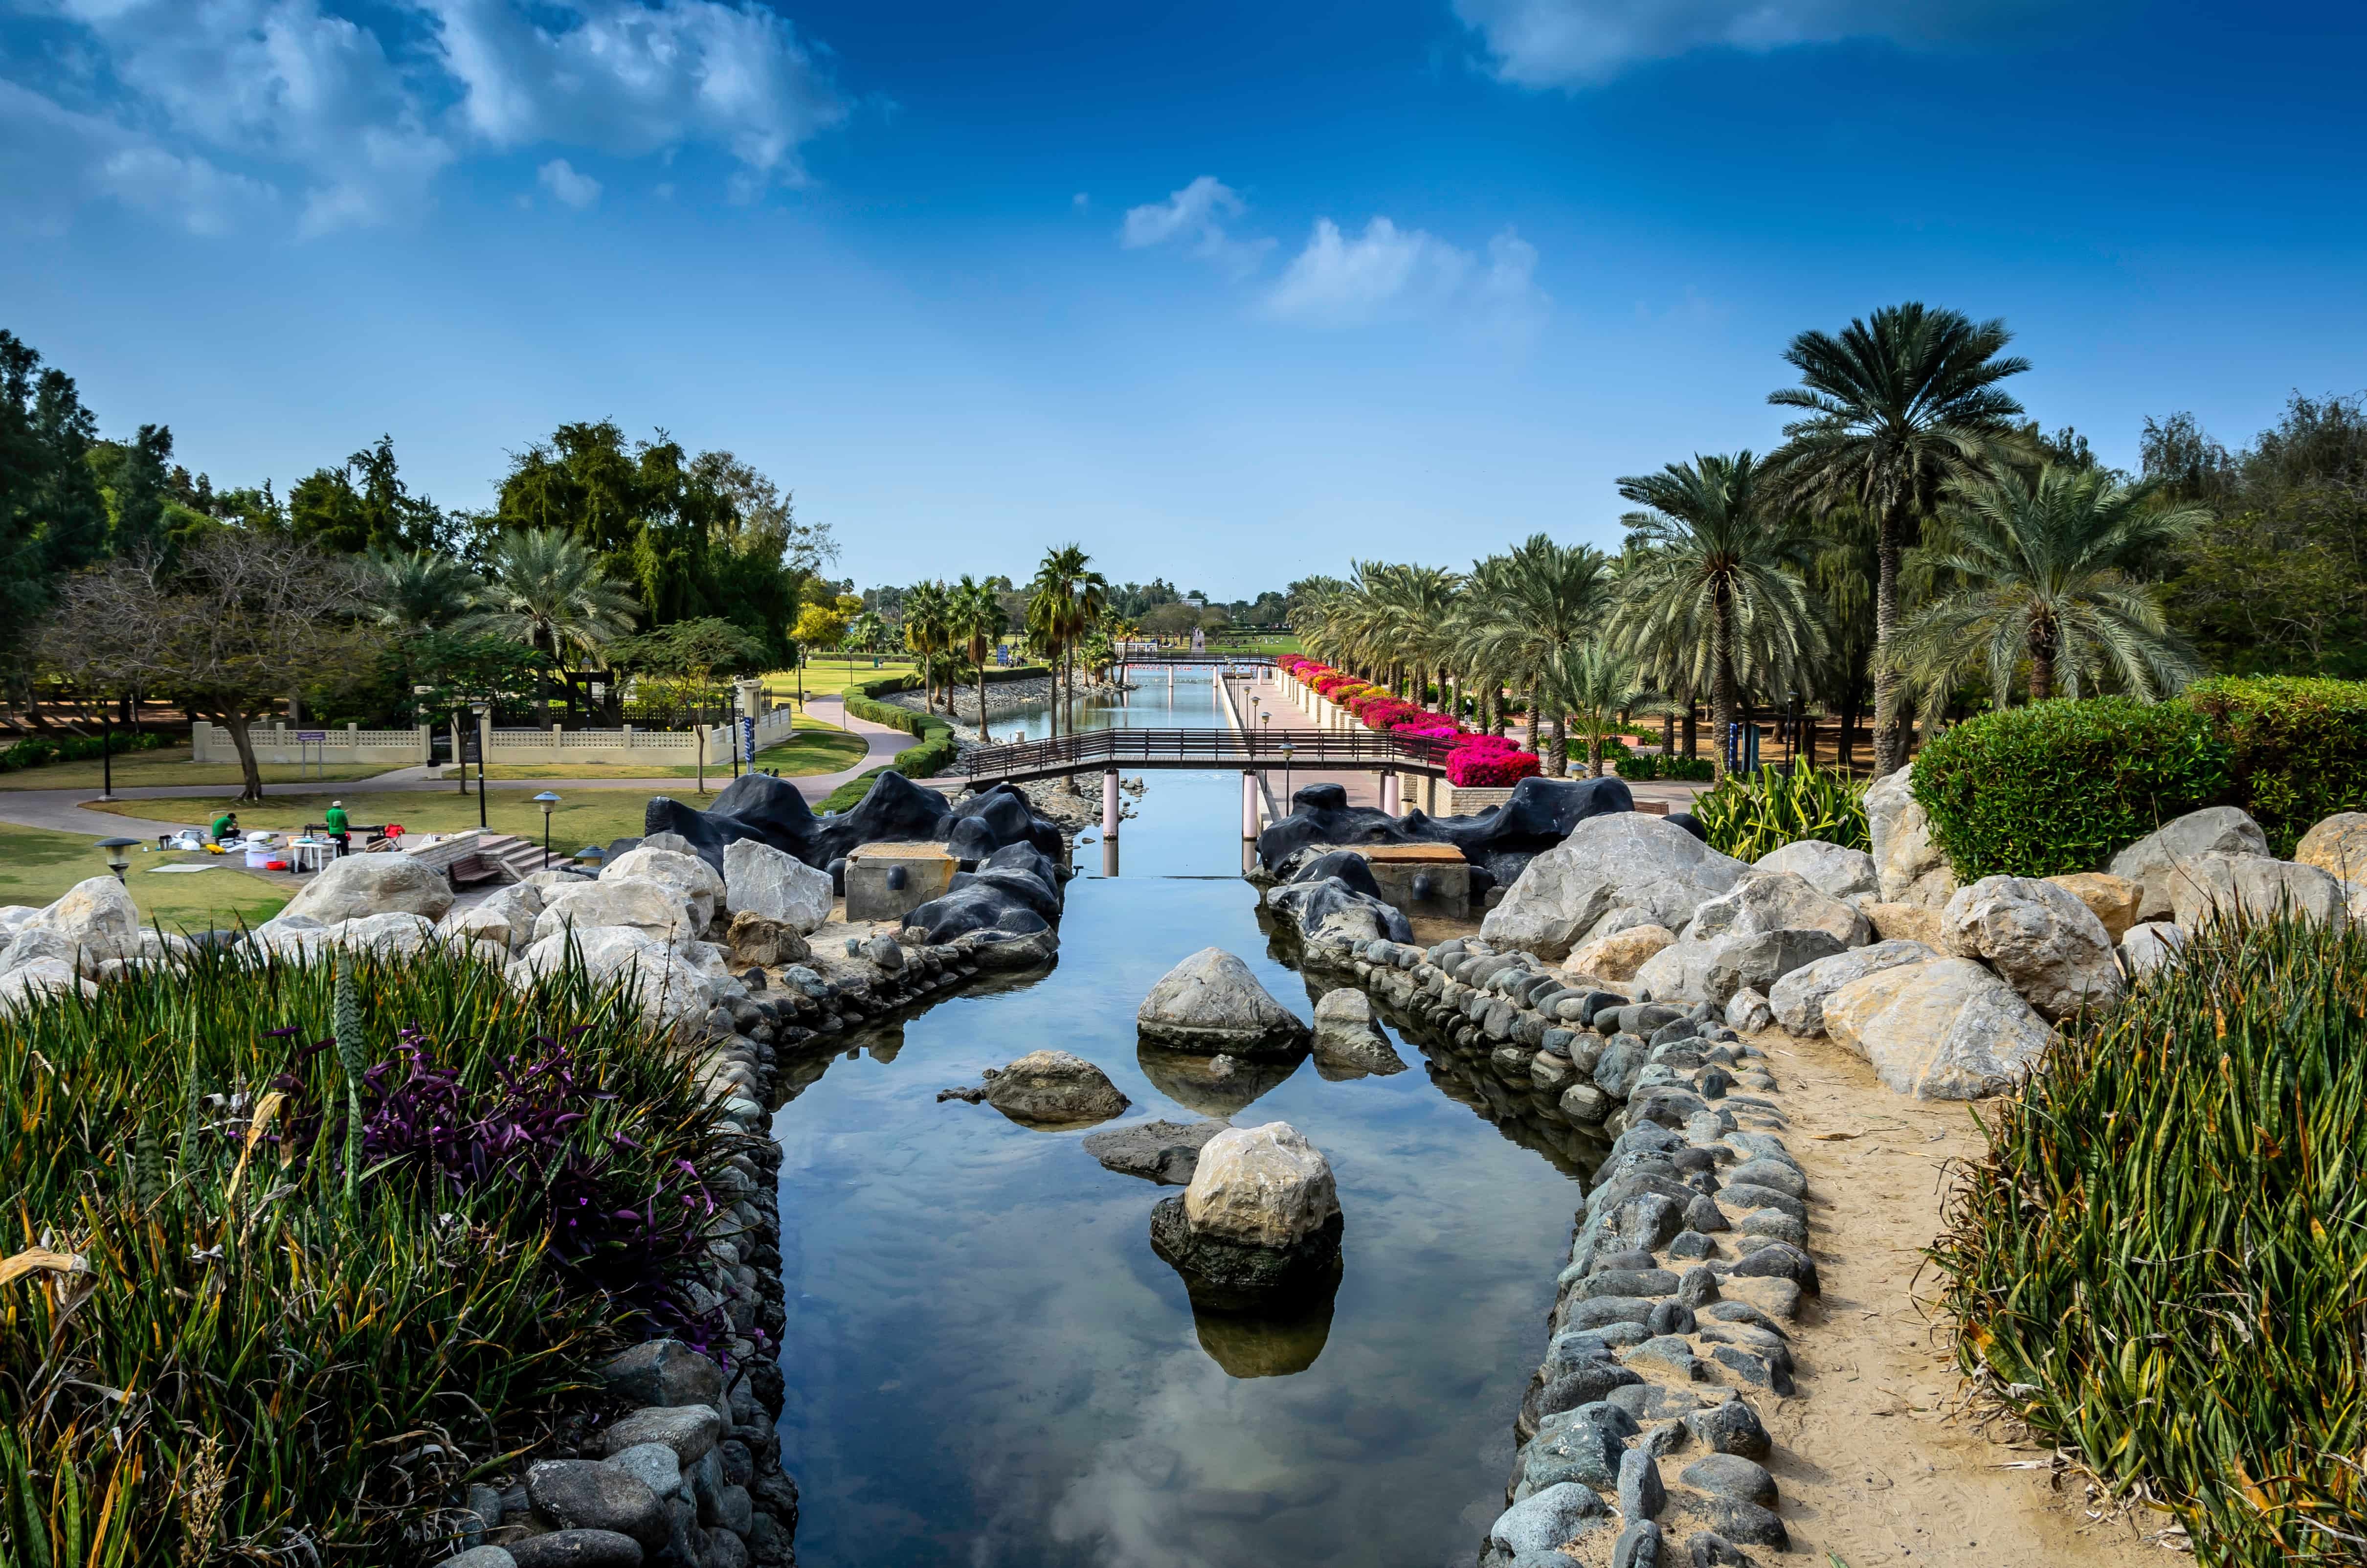 Exploring Al Safa Park 2: A Hiddеn Gеm in Dubai